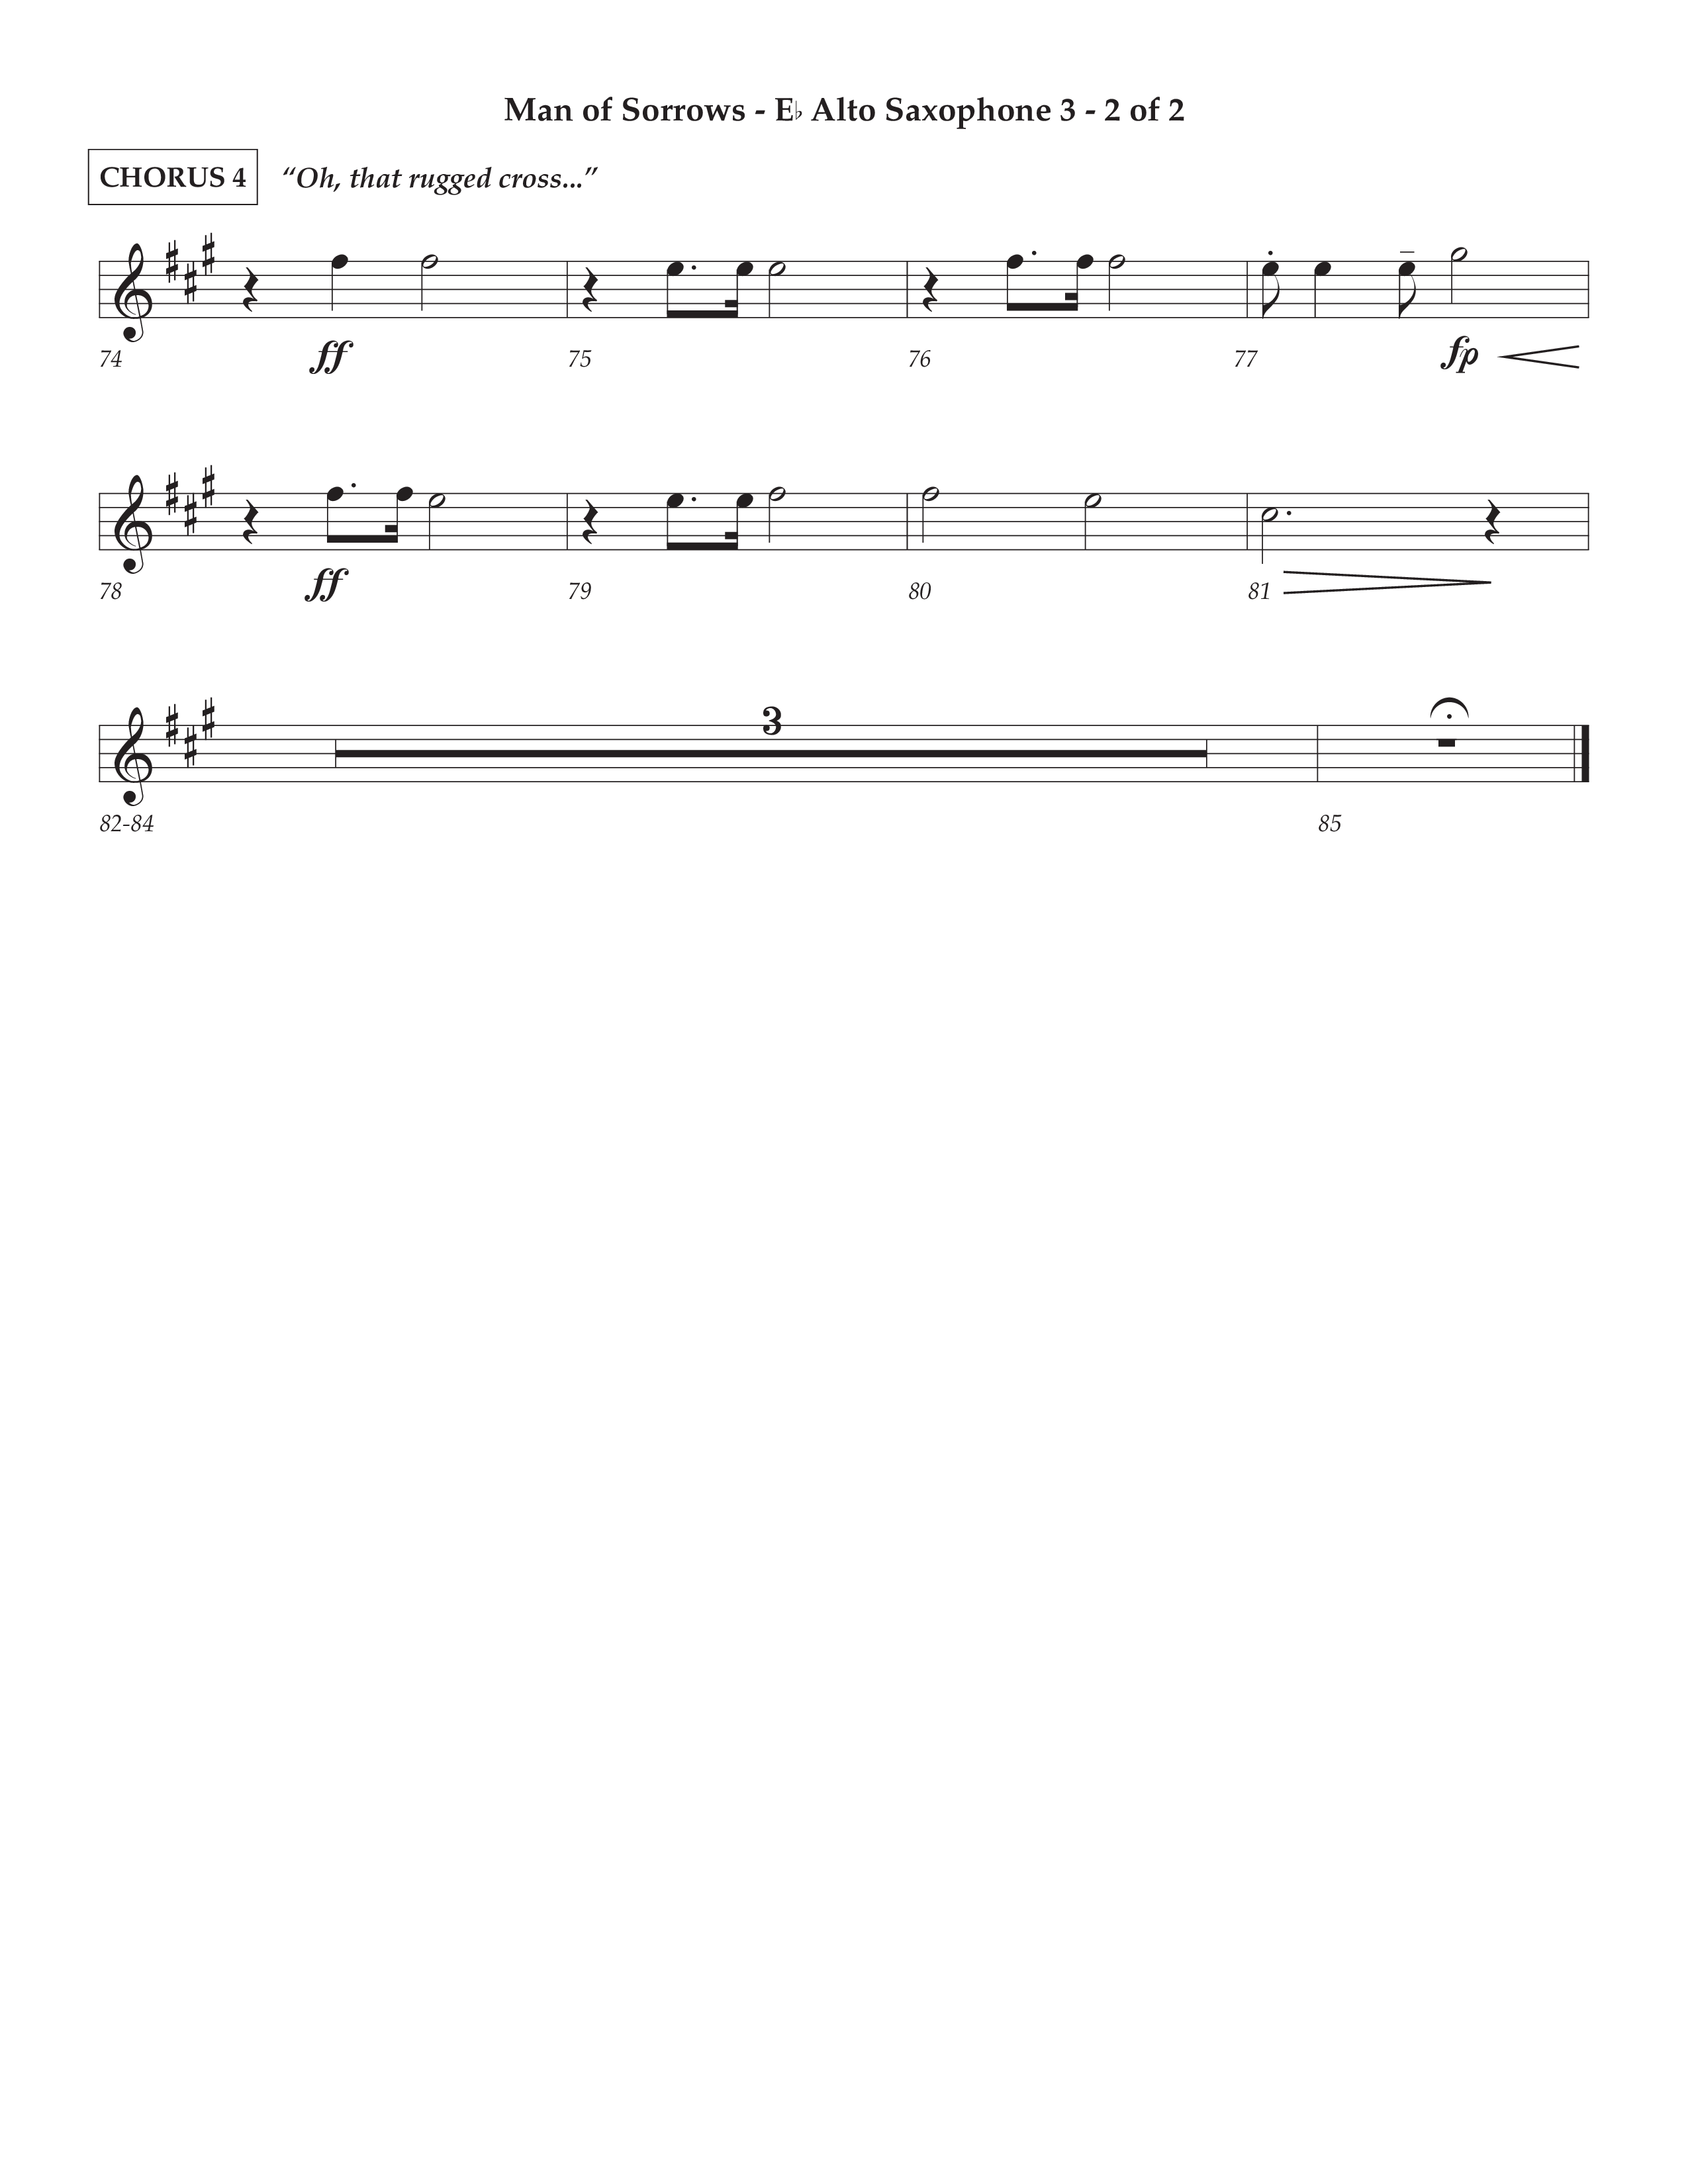 Man Of Sorrows (Choral Anthem SATB) Alto Sax (Lifeway Choral / Arr. Cliff Duren / Orch. Keith Christopher)